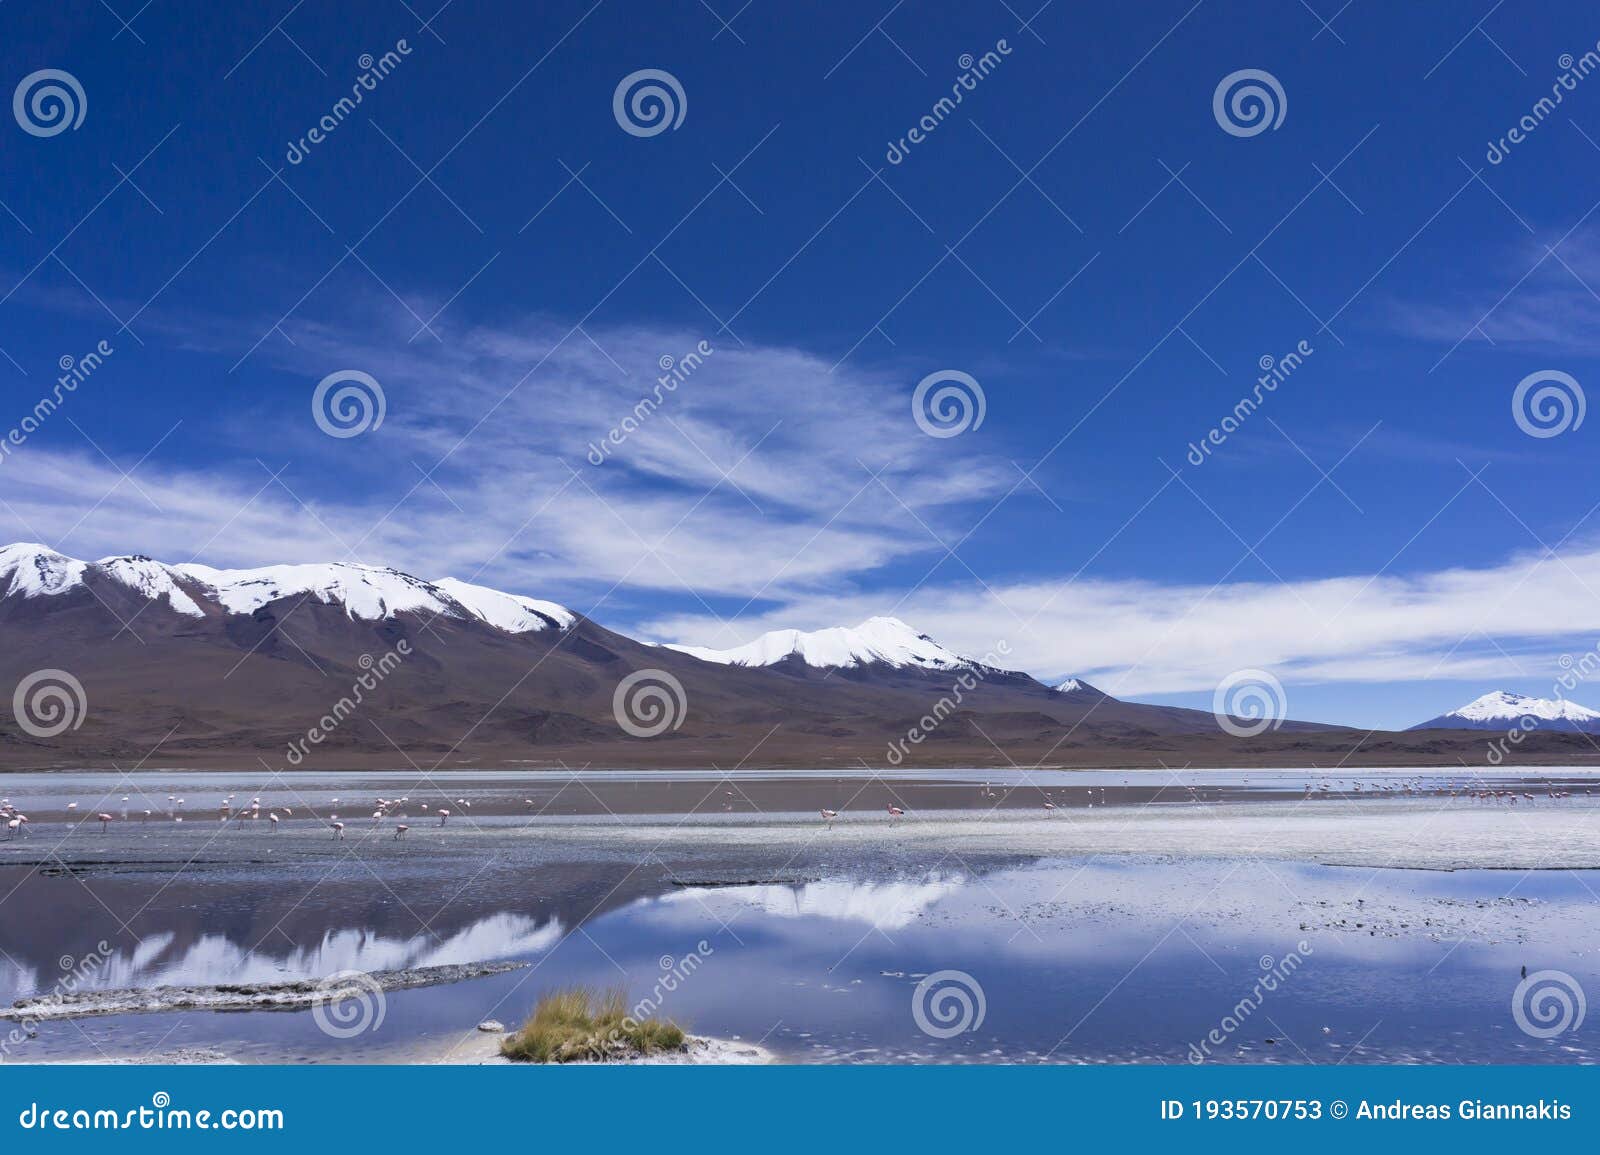 laguna pasto grande, bolivia, south america